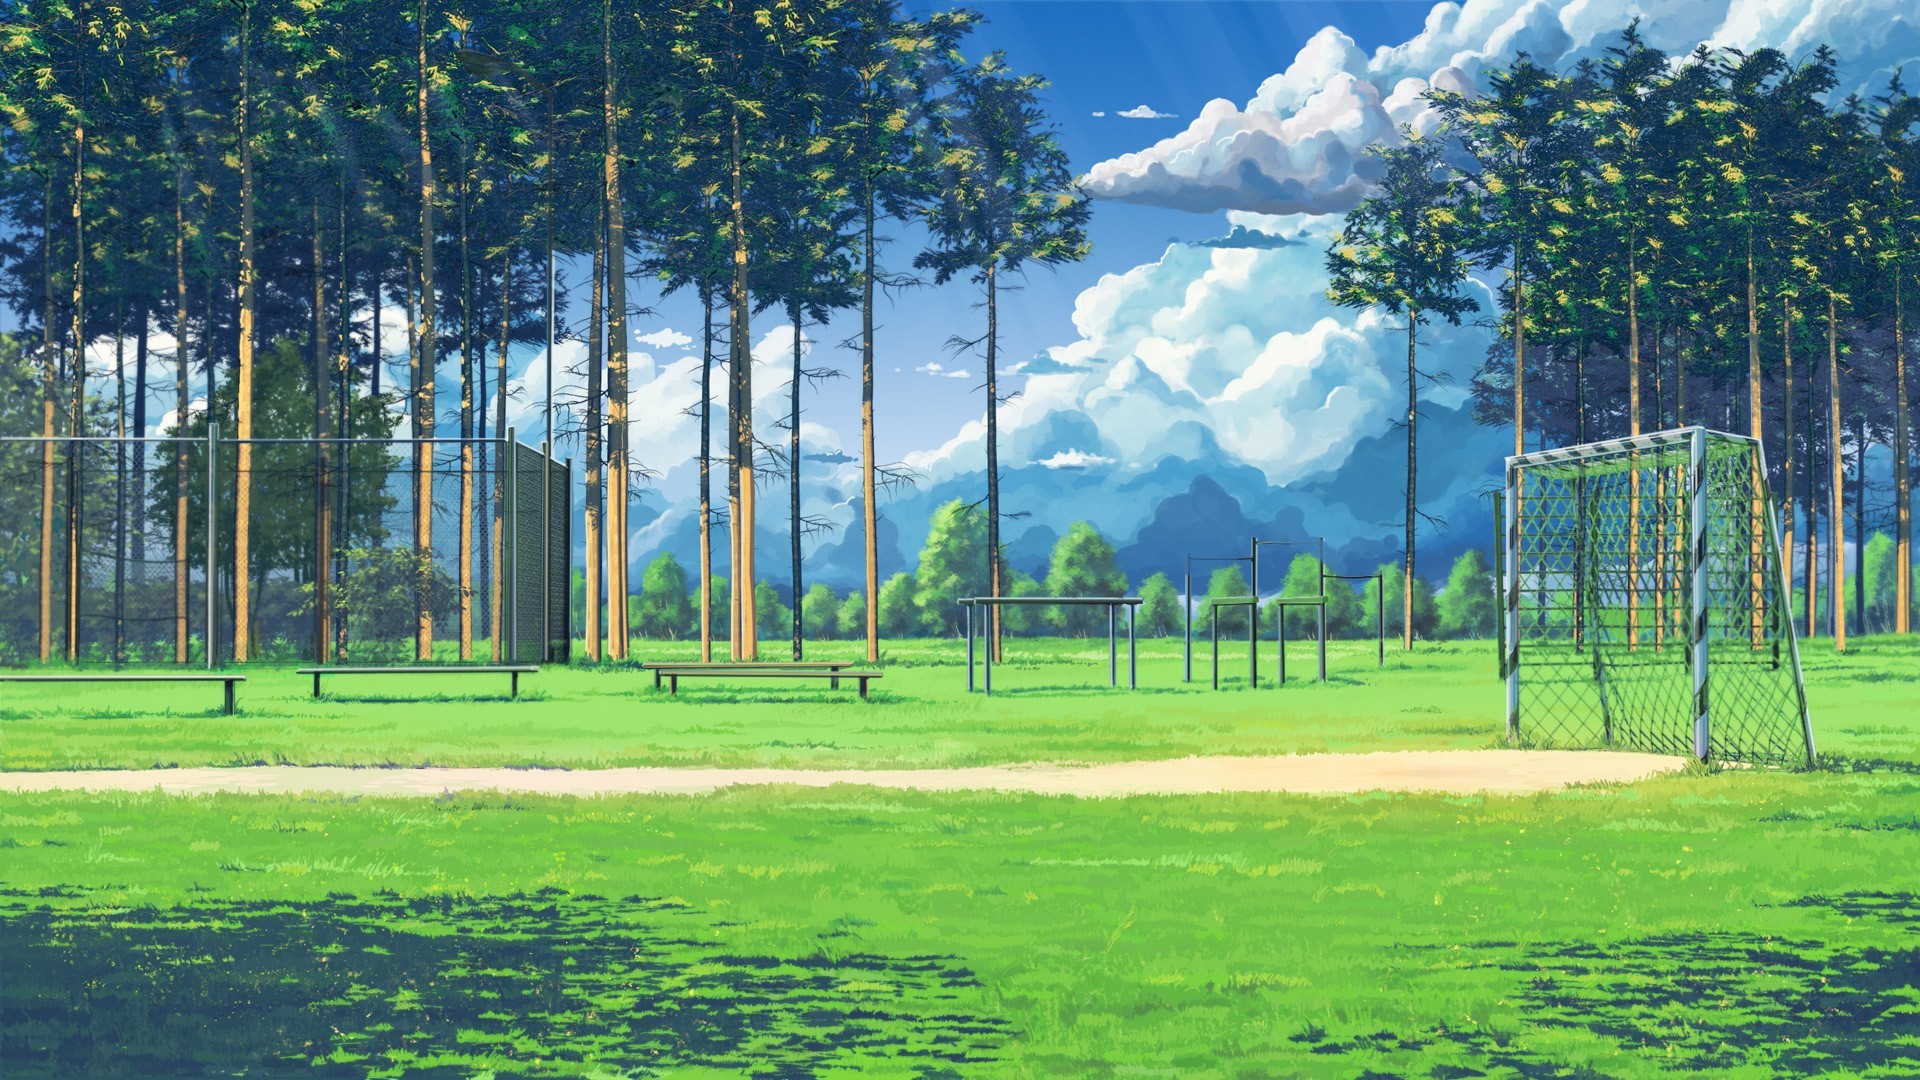 1920x1080 Soccer Field - Tags: cartoon, anime, background, grass, dirt, trees